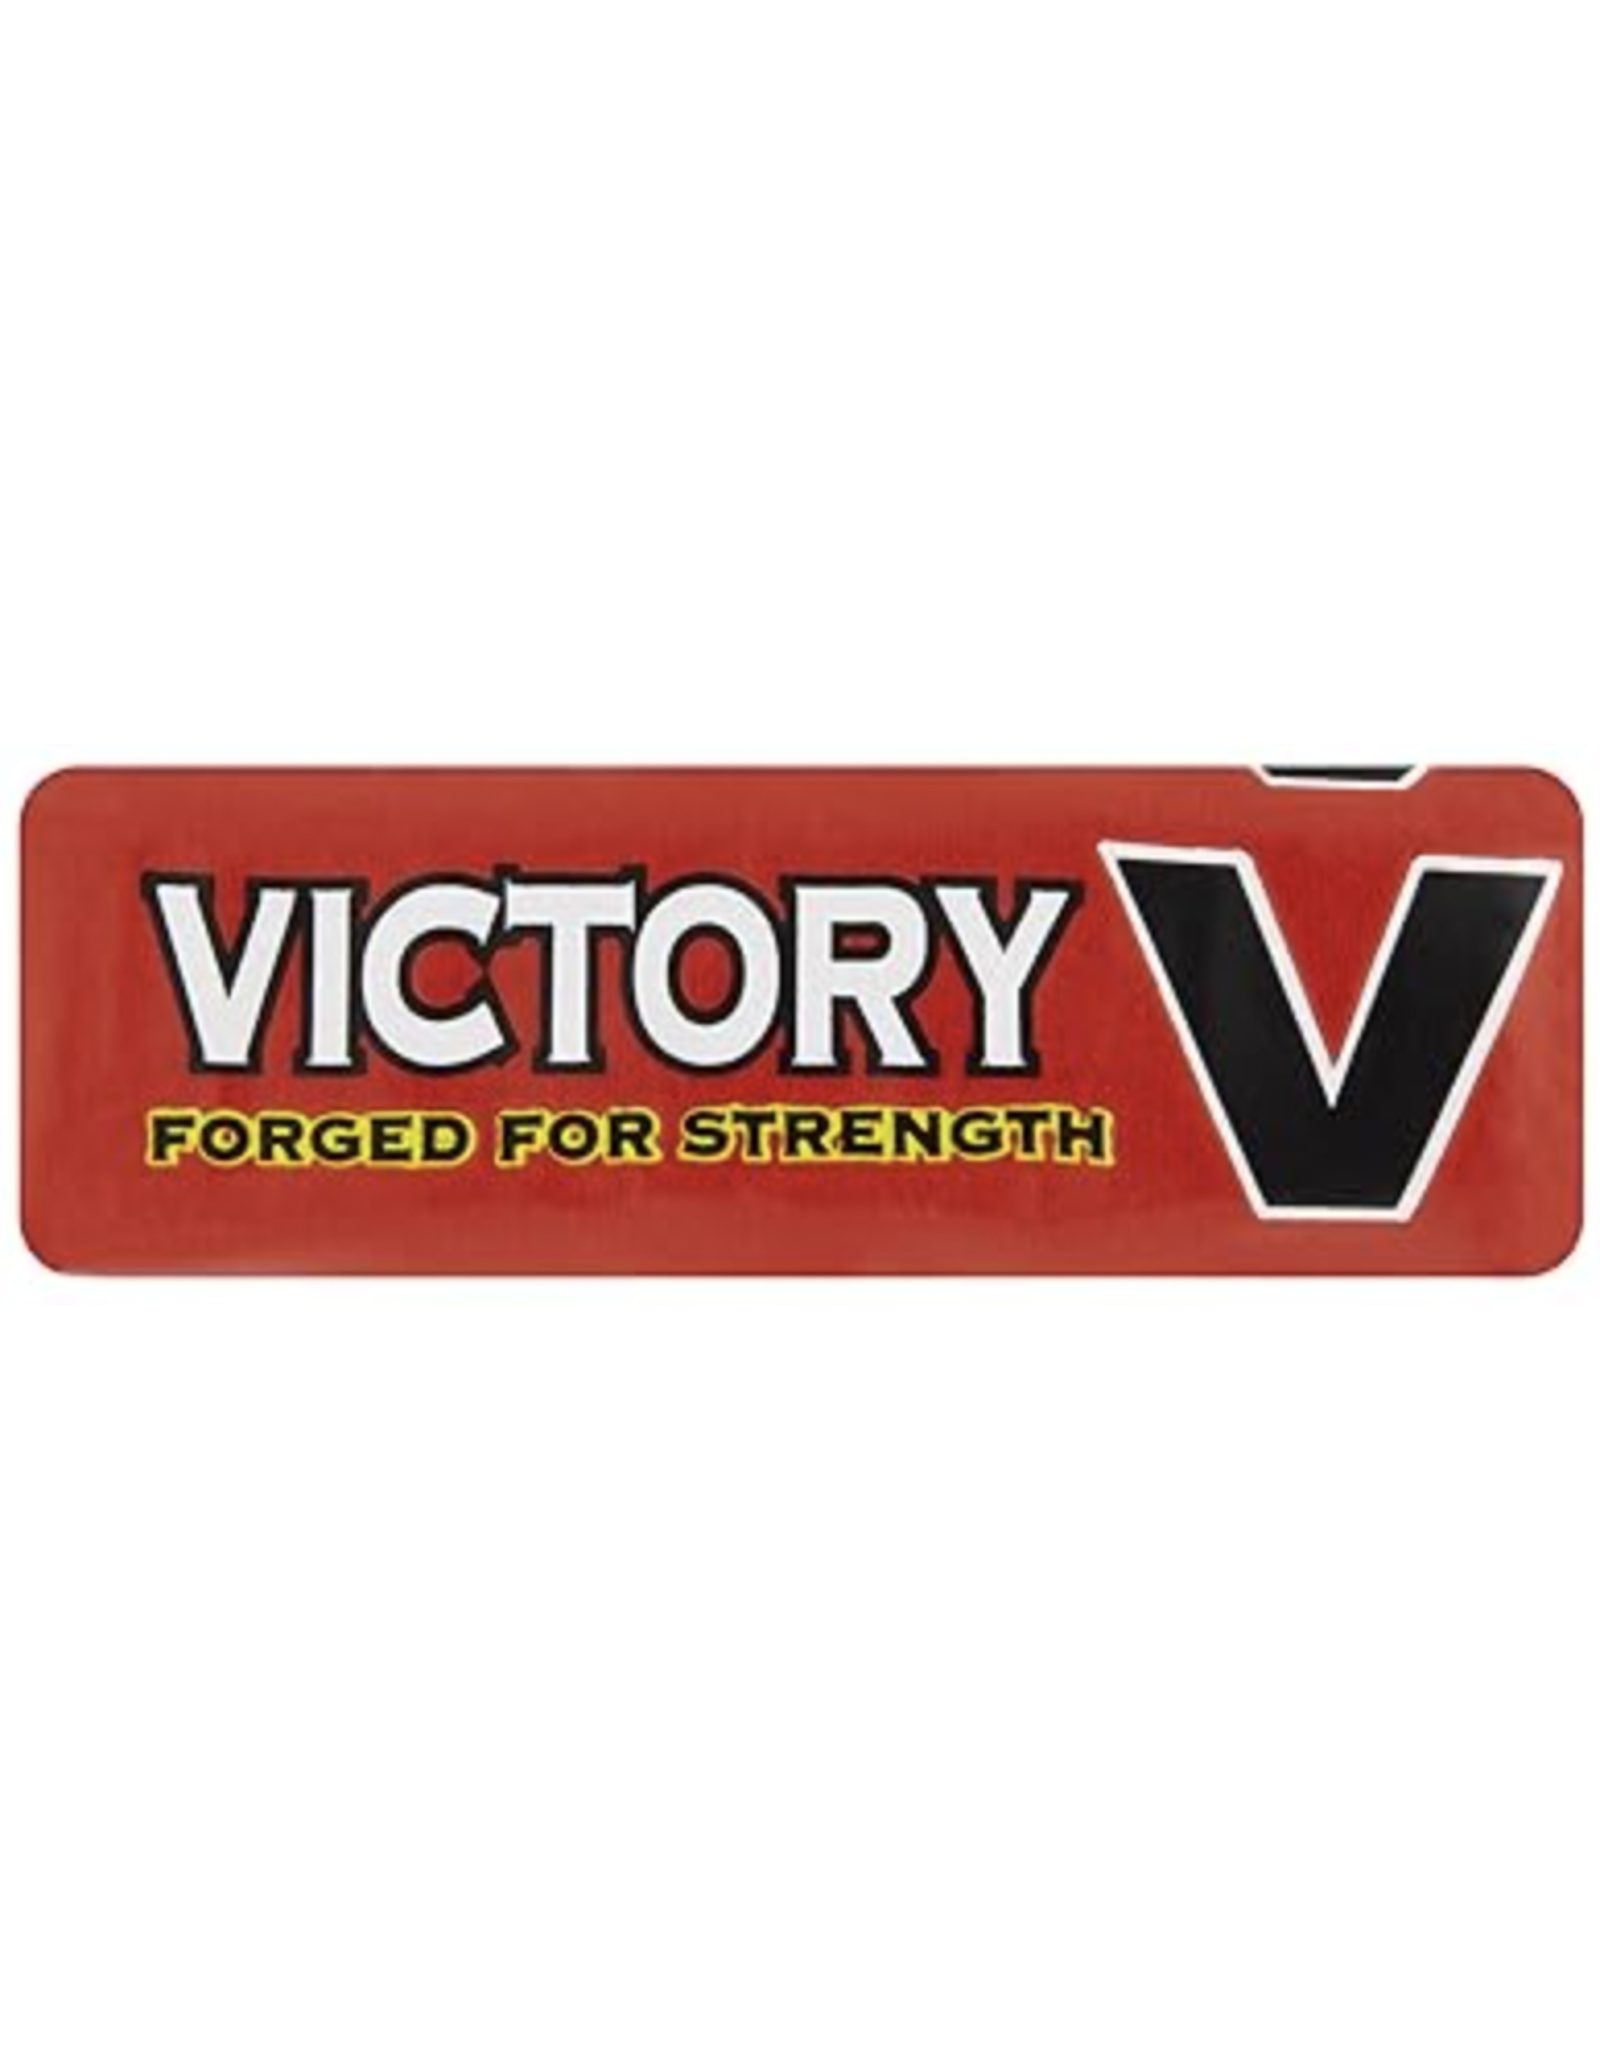 Jackson Victory V Stick Packs 35g (British)